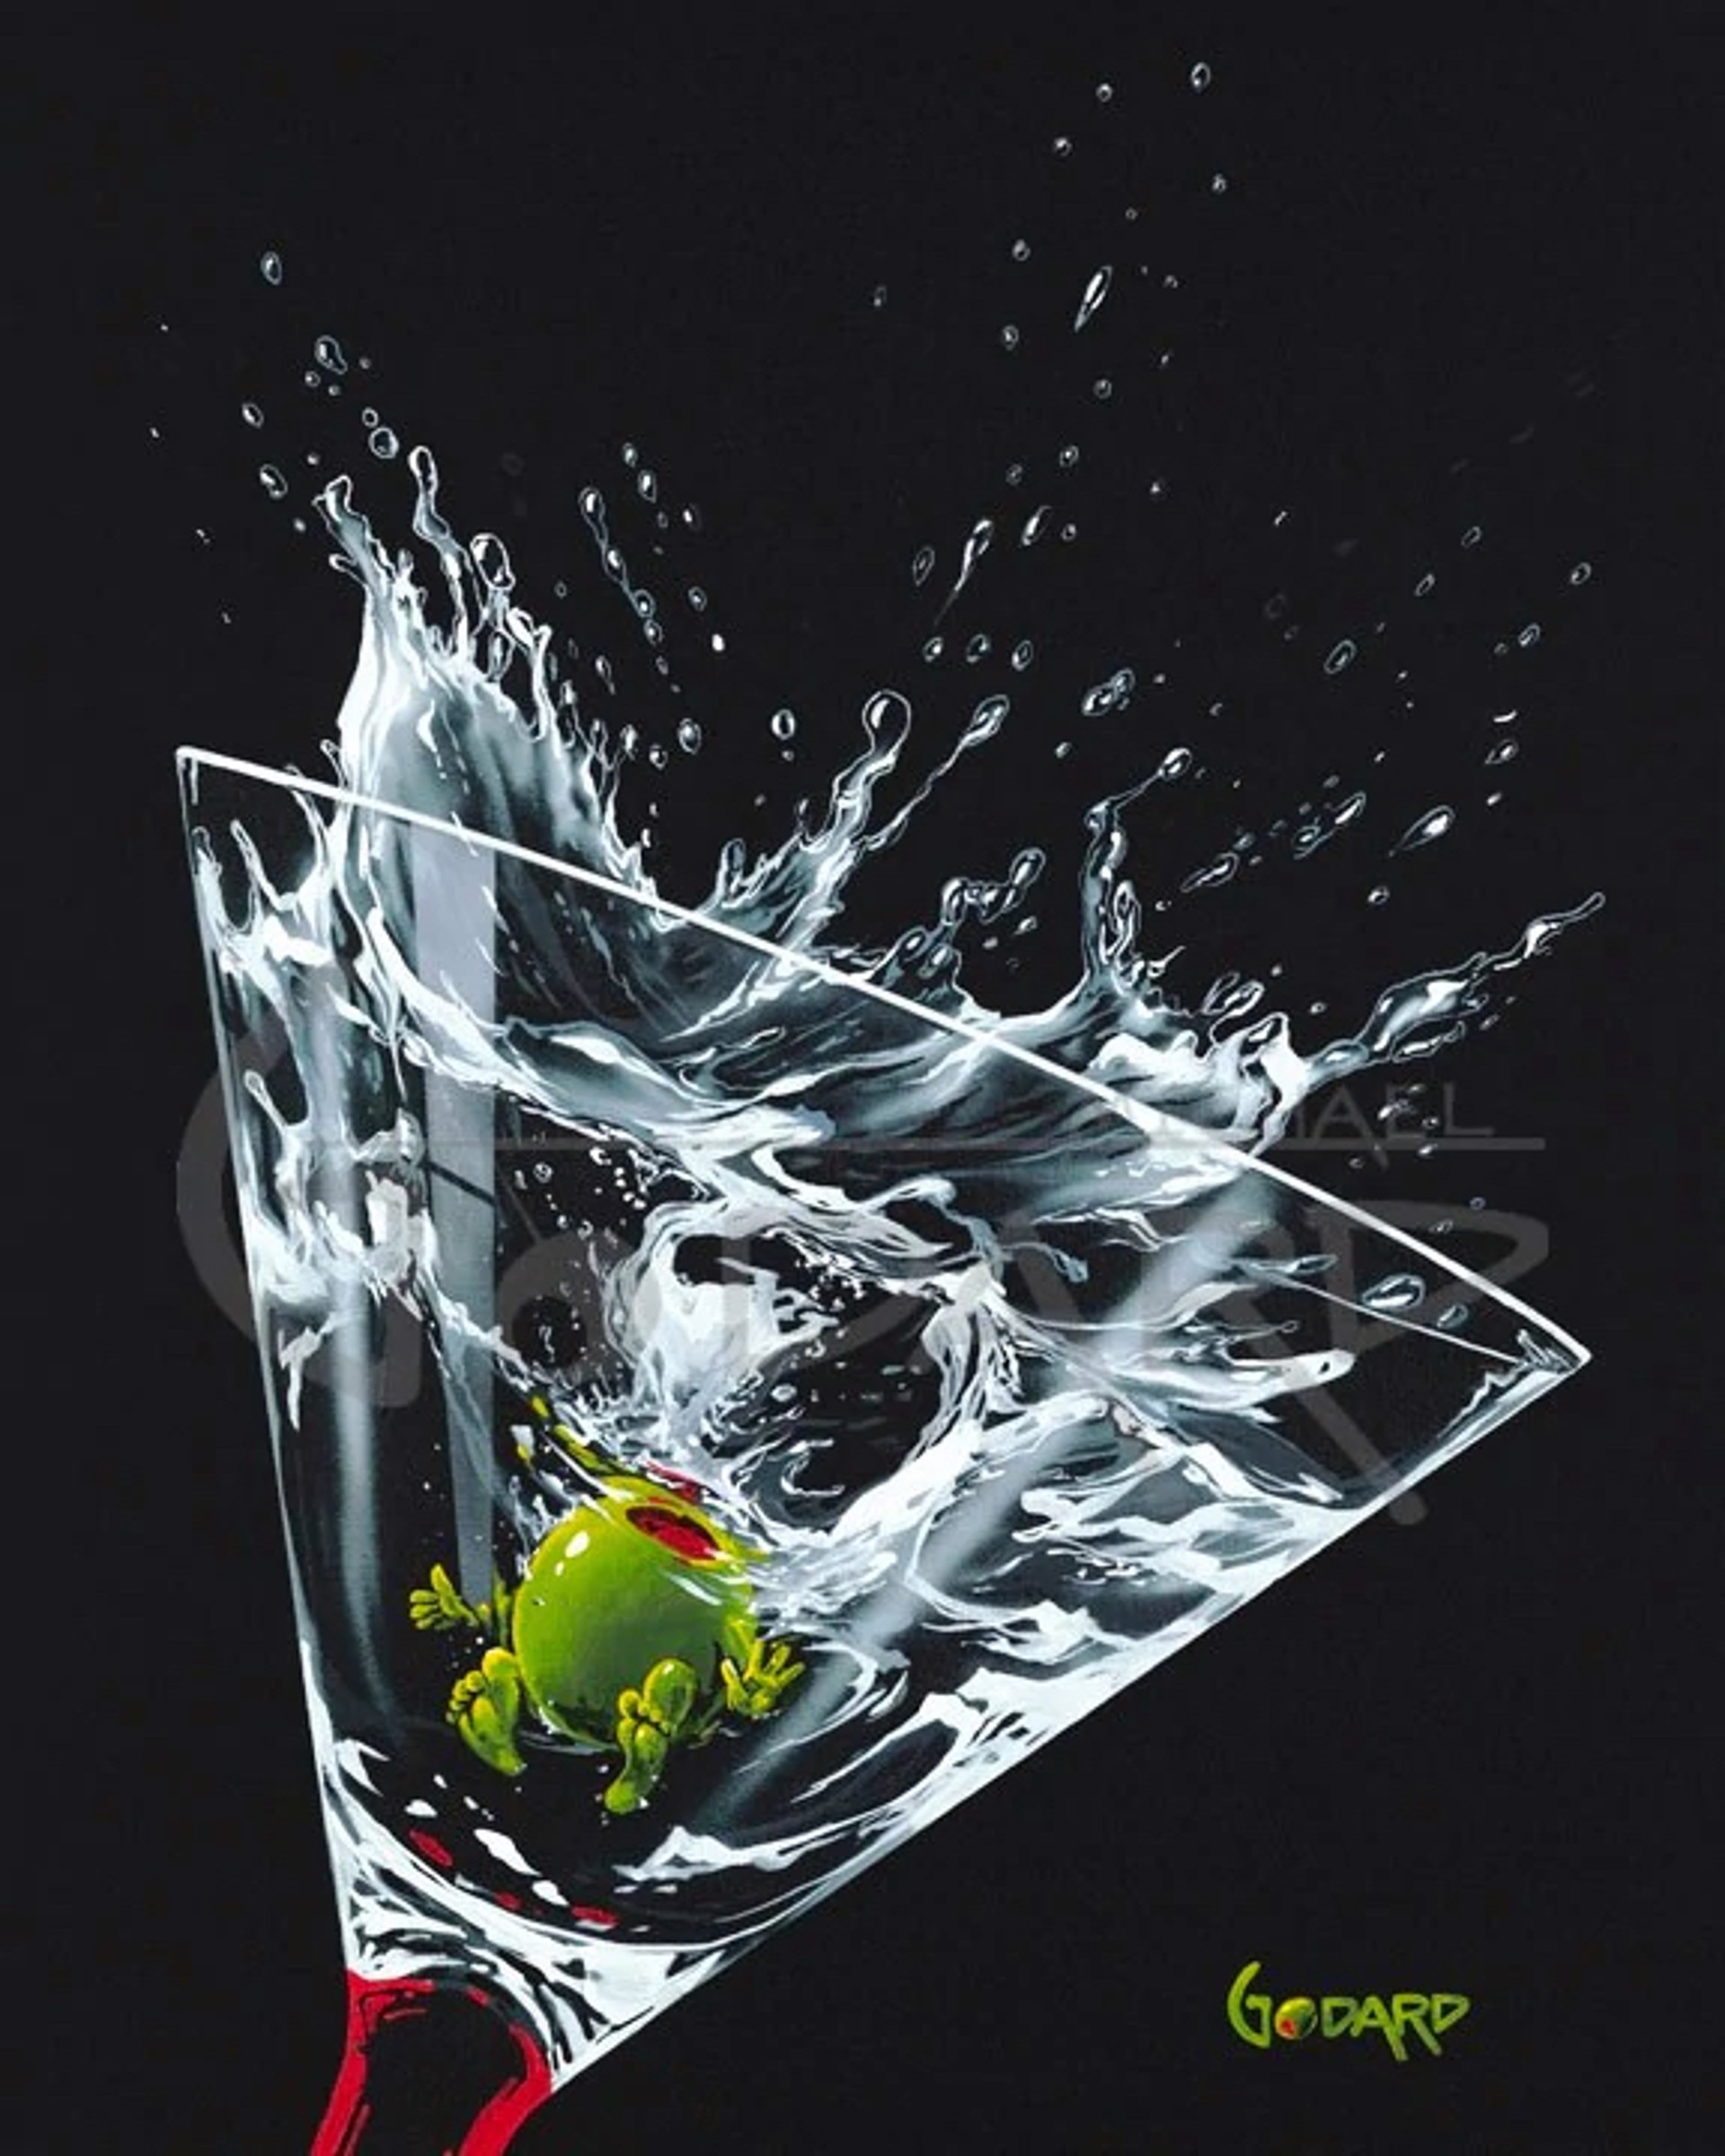 Splash by Michael Godard